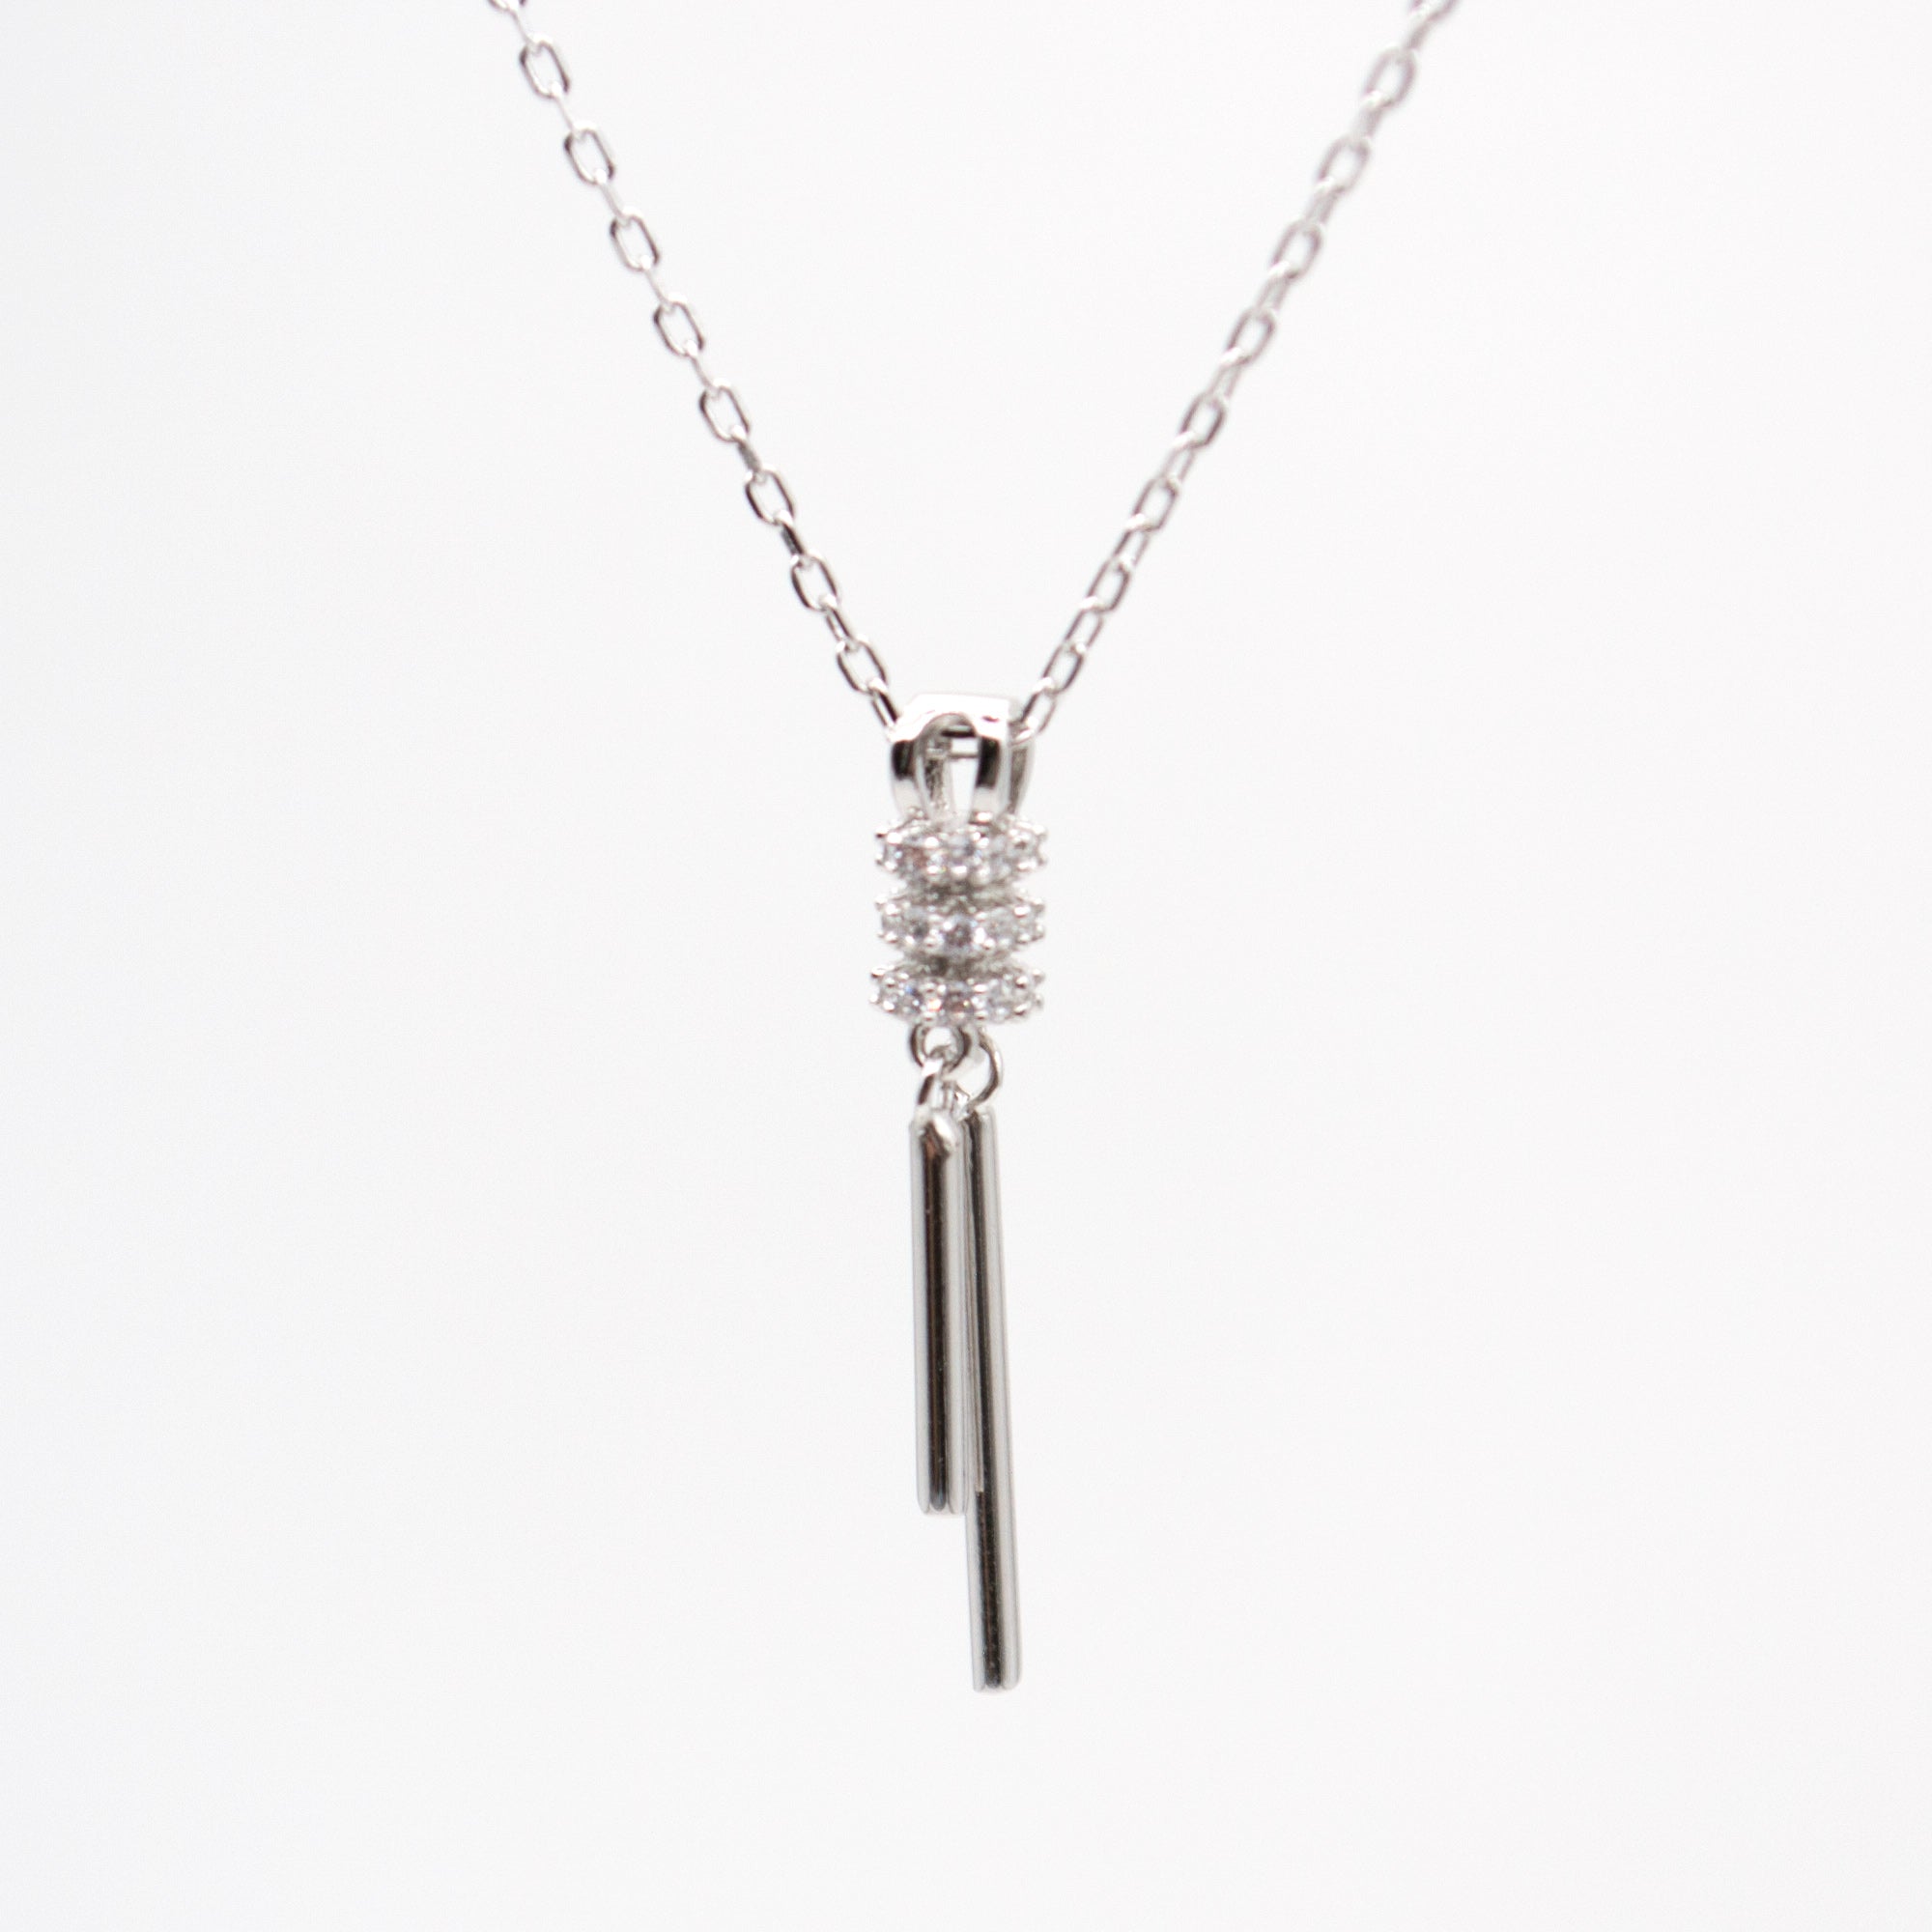 Jewdii 925 Silver Pendant Necklace with Cubic Zirconia